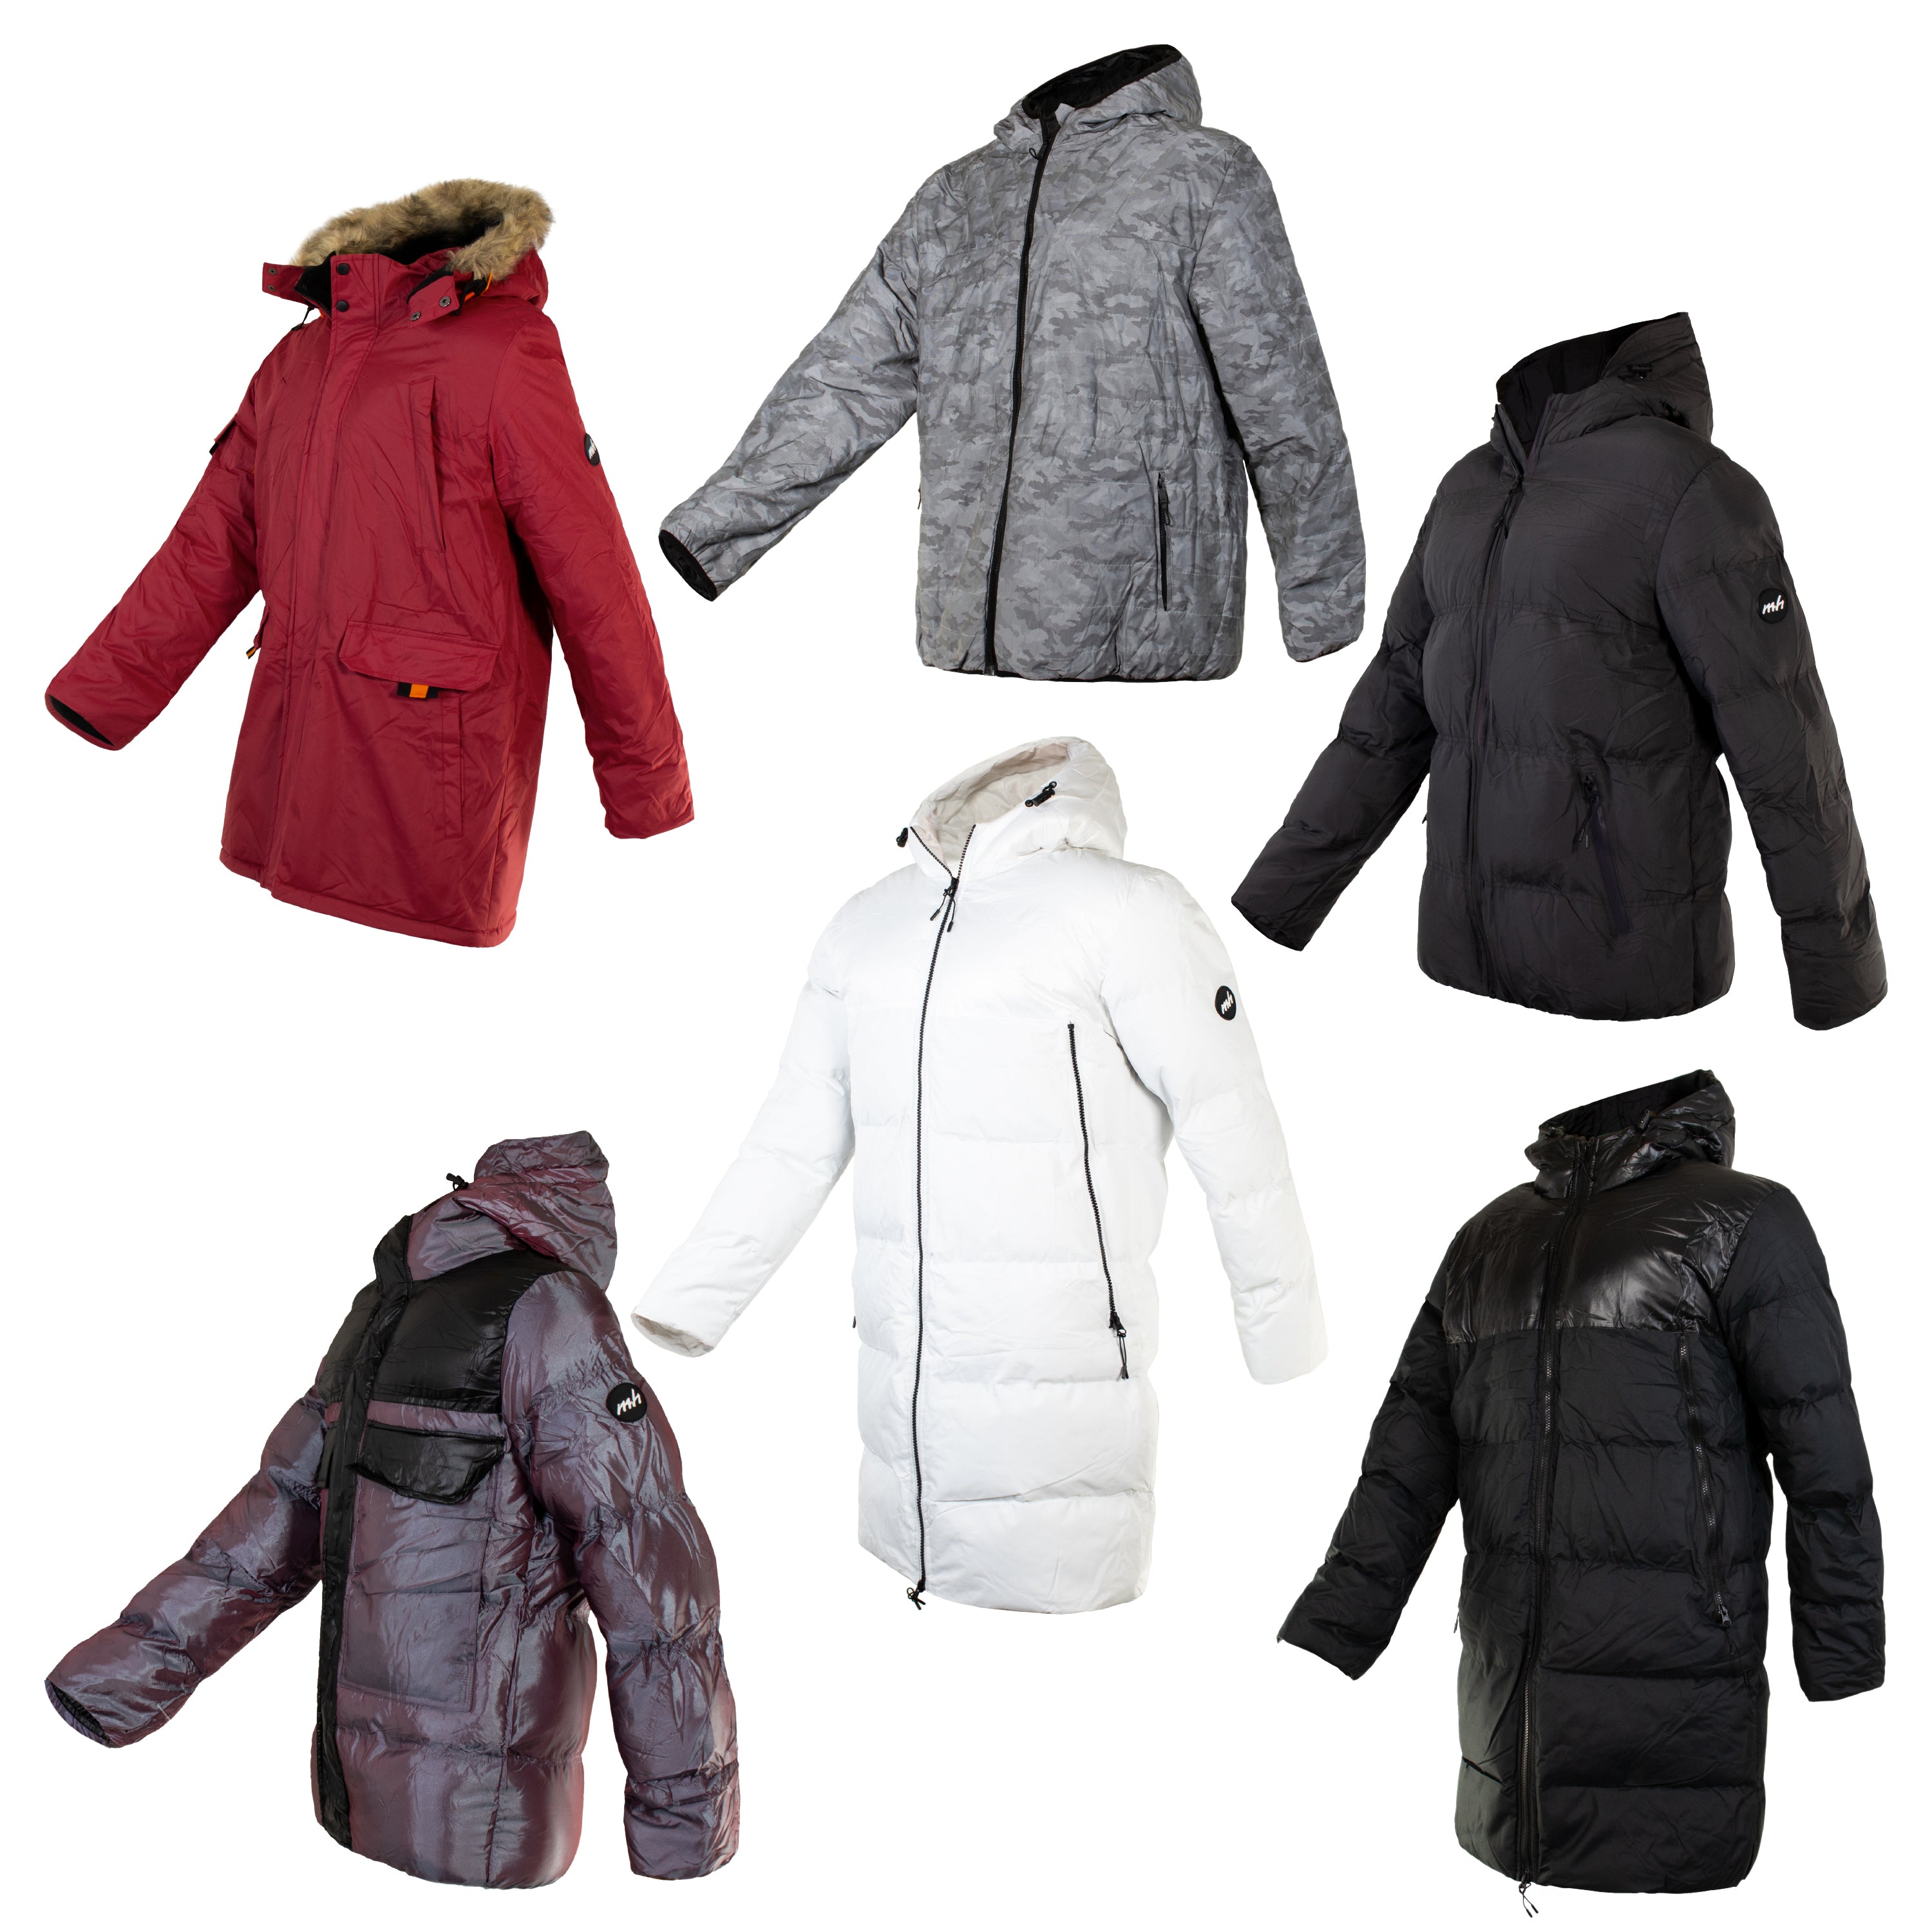 Wholesale Jackets for Homeless Donations & Charity | Bulk Winter Coats